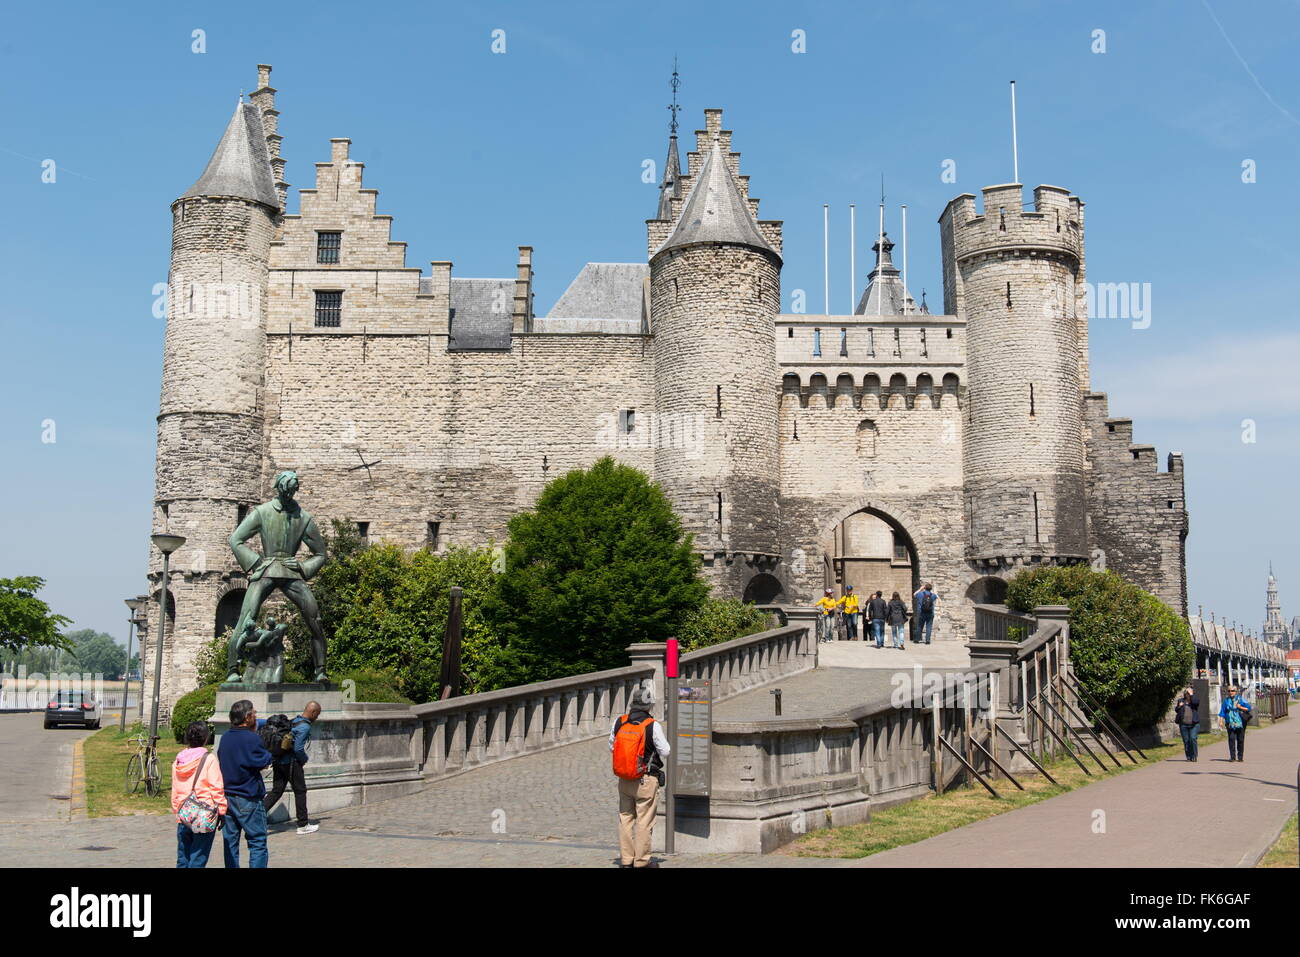 Het Steen, una fortezza medievale di Anversa, Belgio, Europa Foto Stock